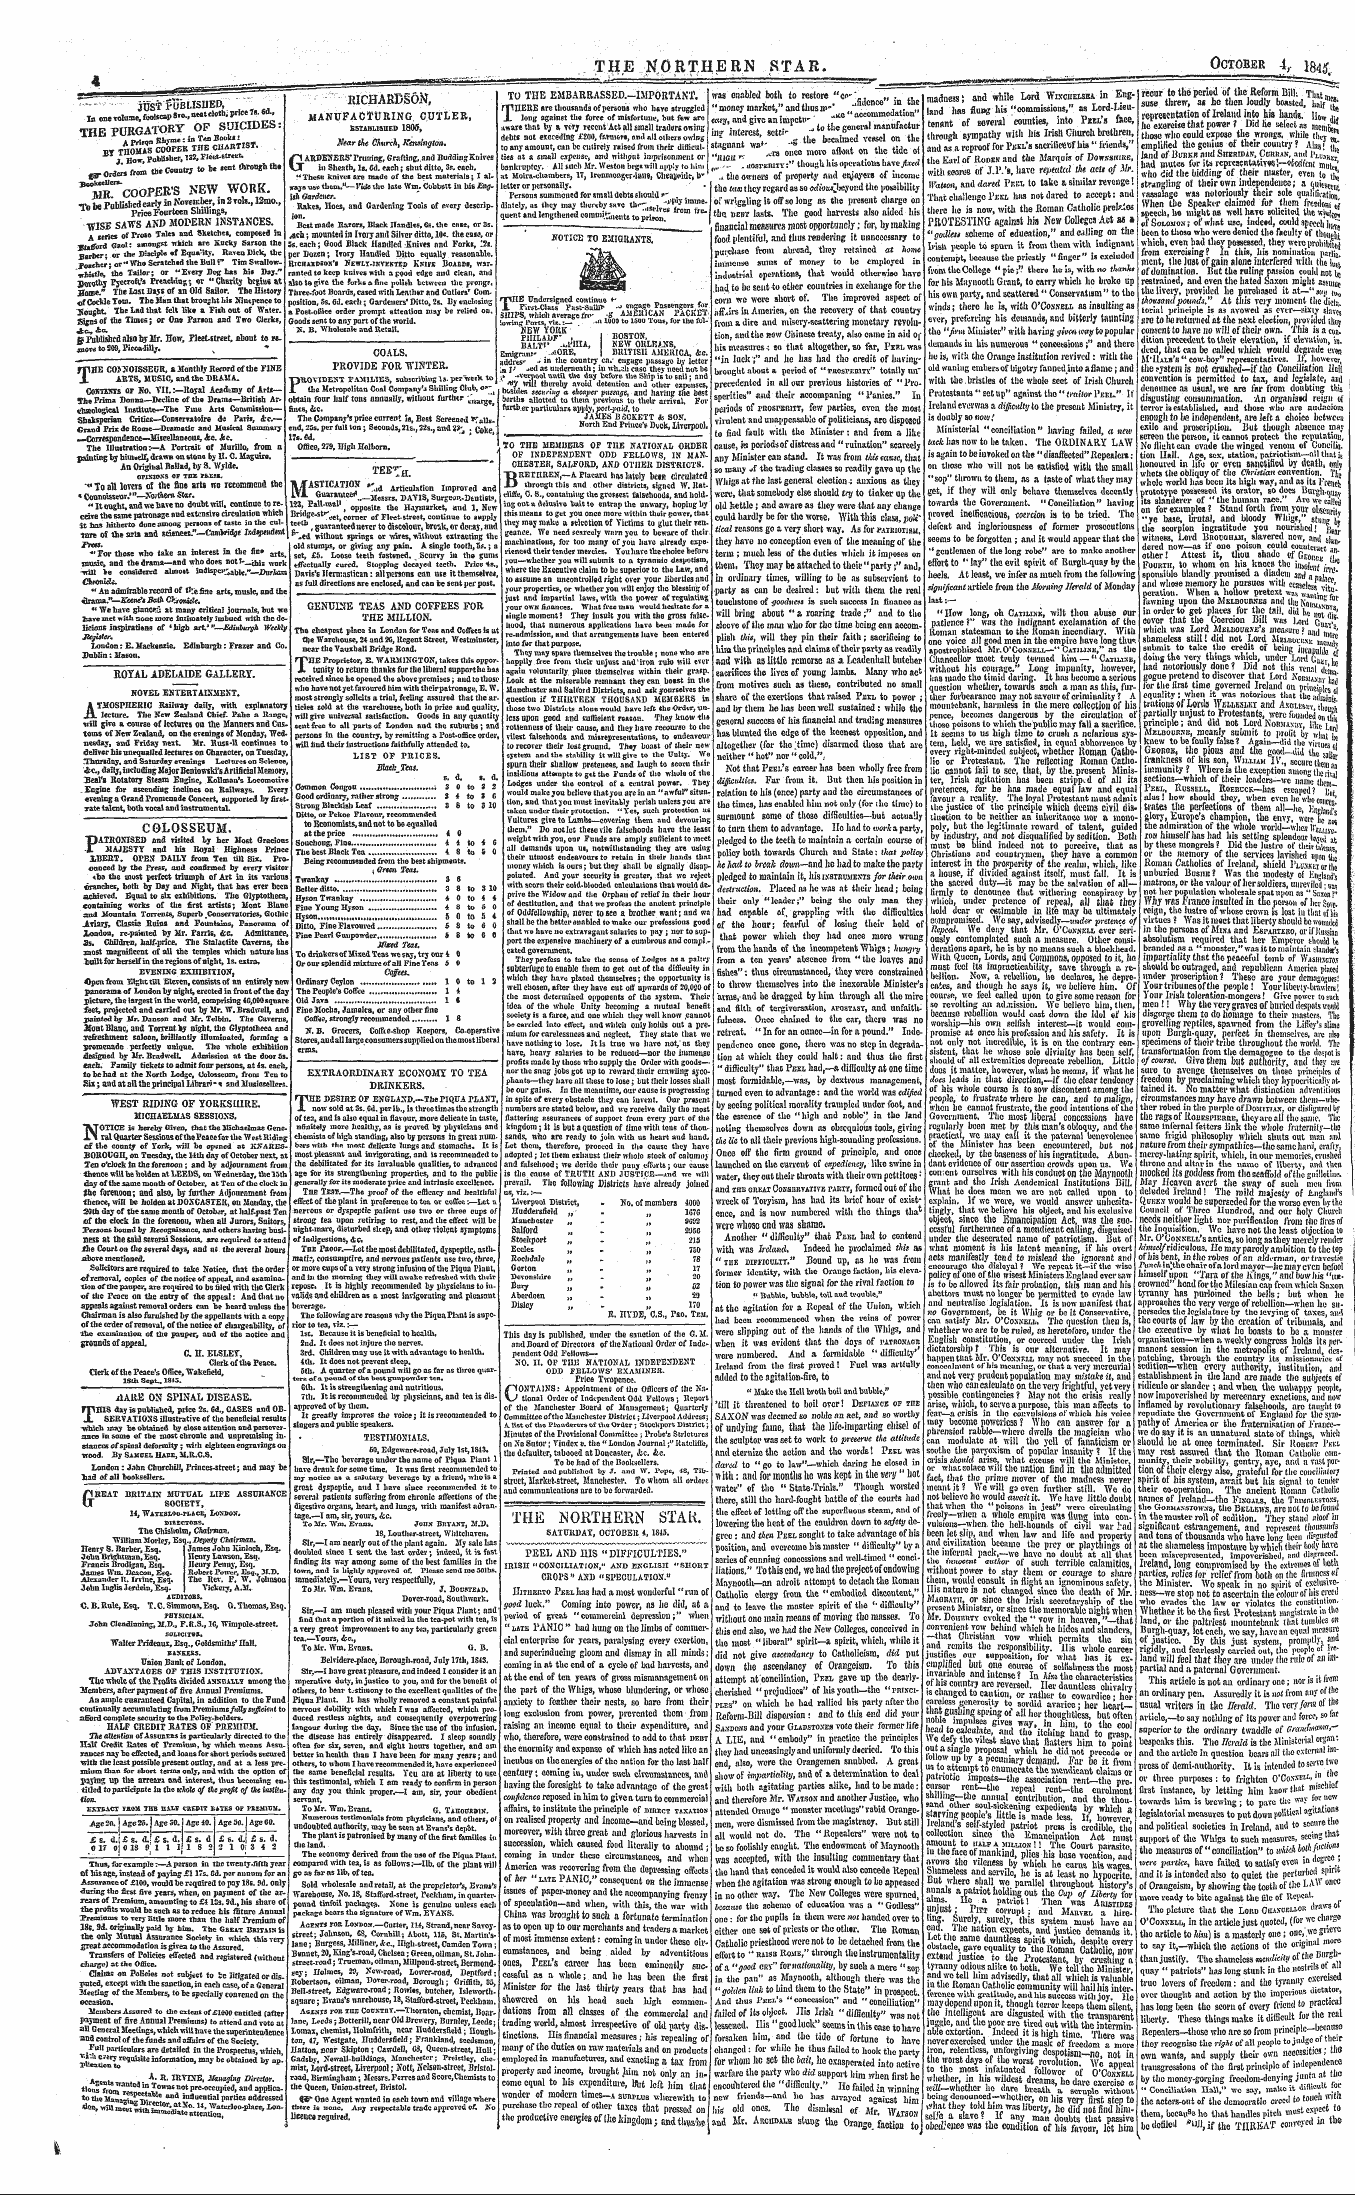 Northern Star (1837-1852): jS F Y, 4th edition - Ad00413